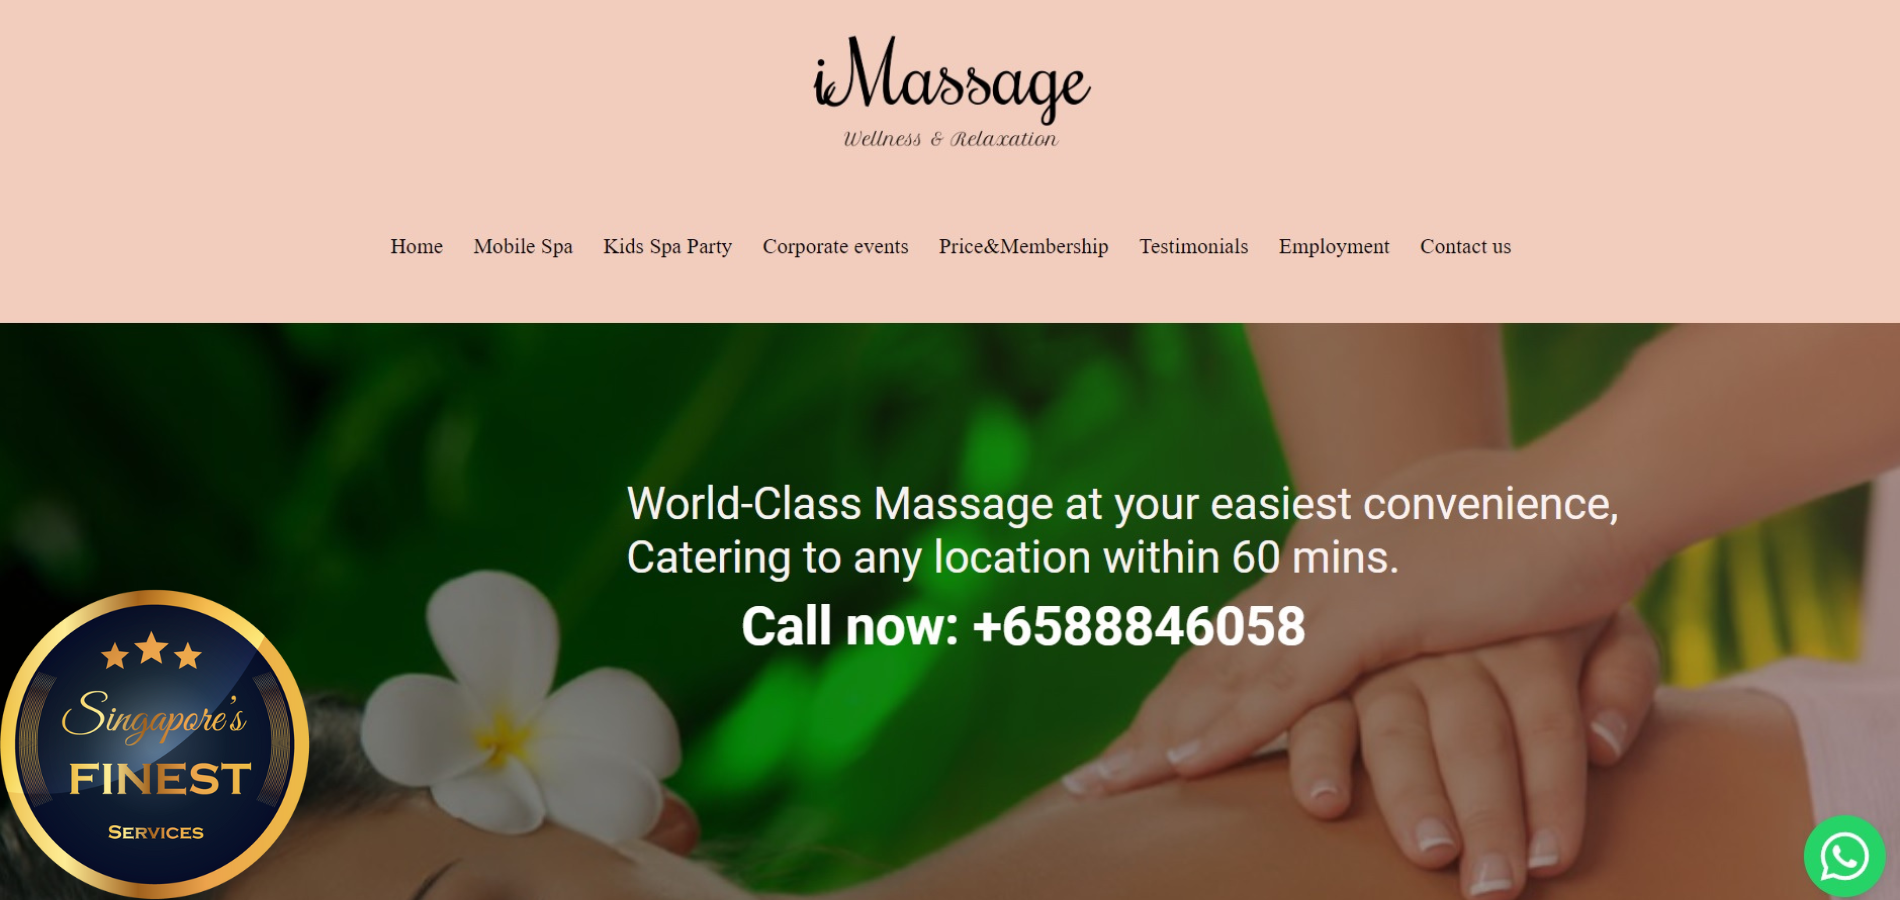 iMassage - Home Massage Singapore